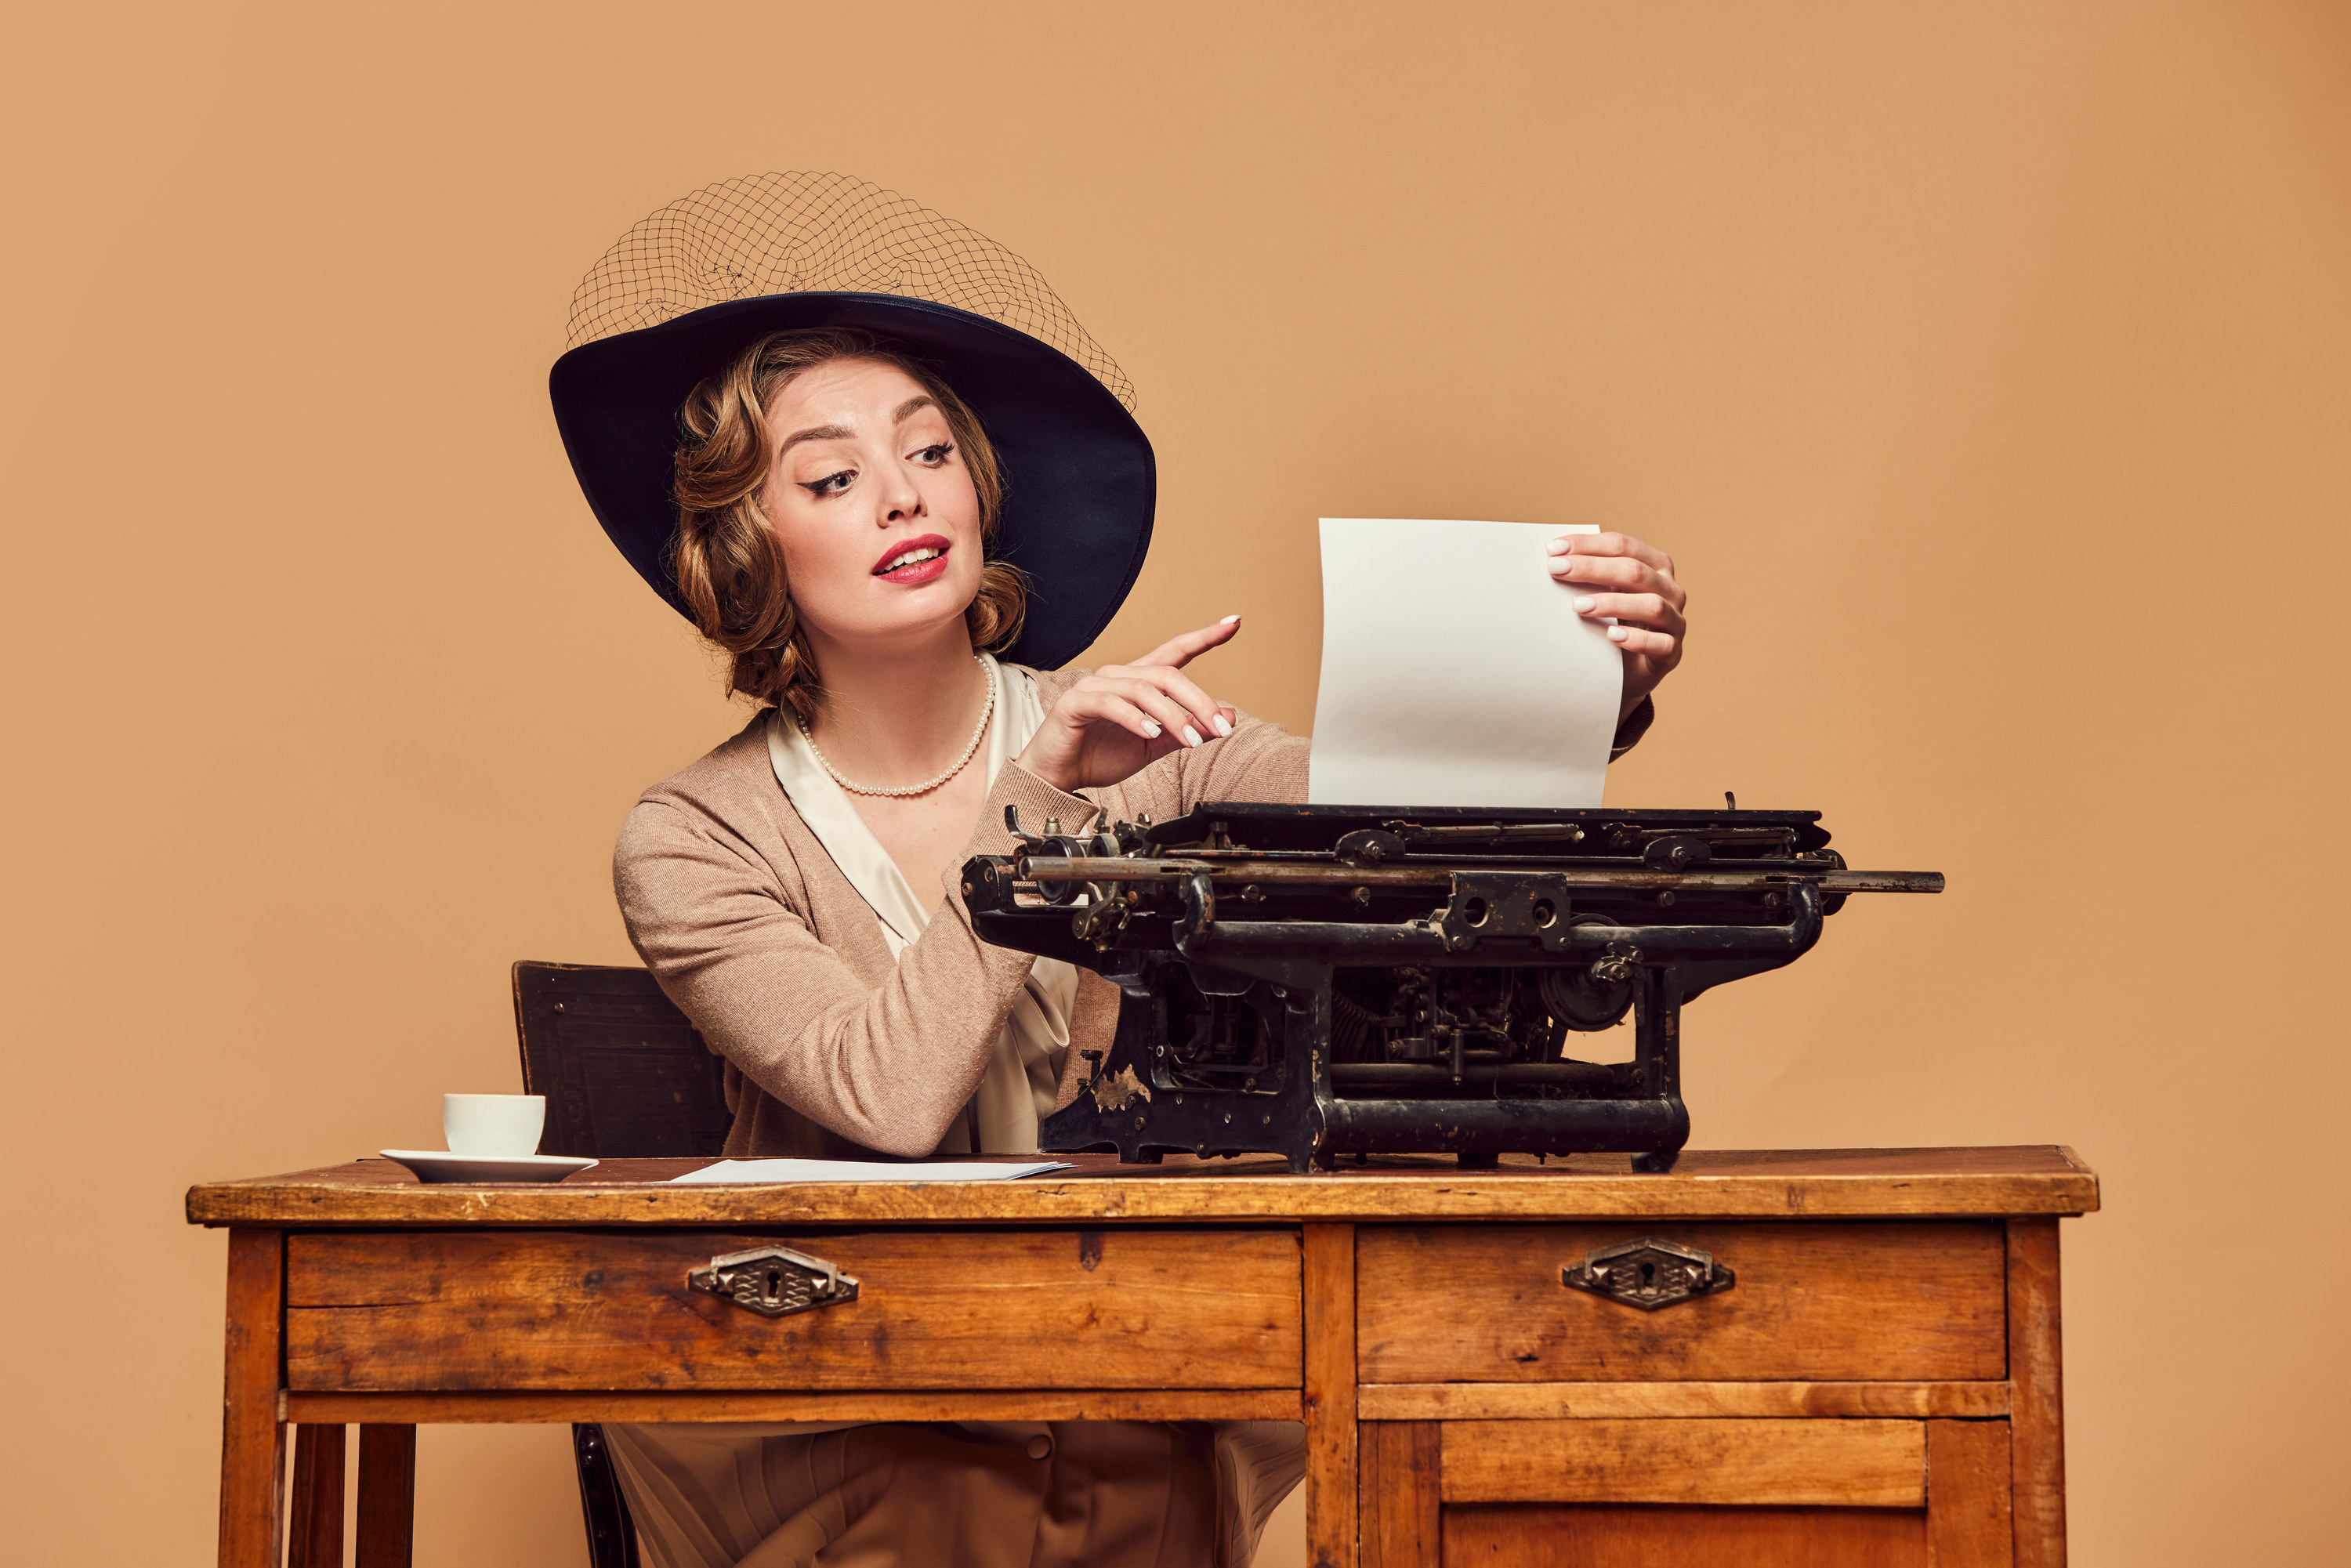 retro secretary on a typewriter